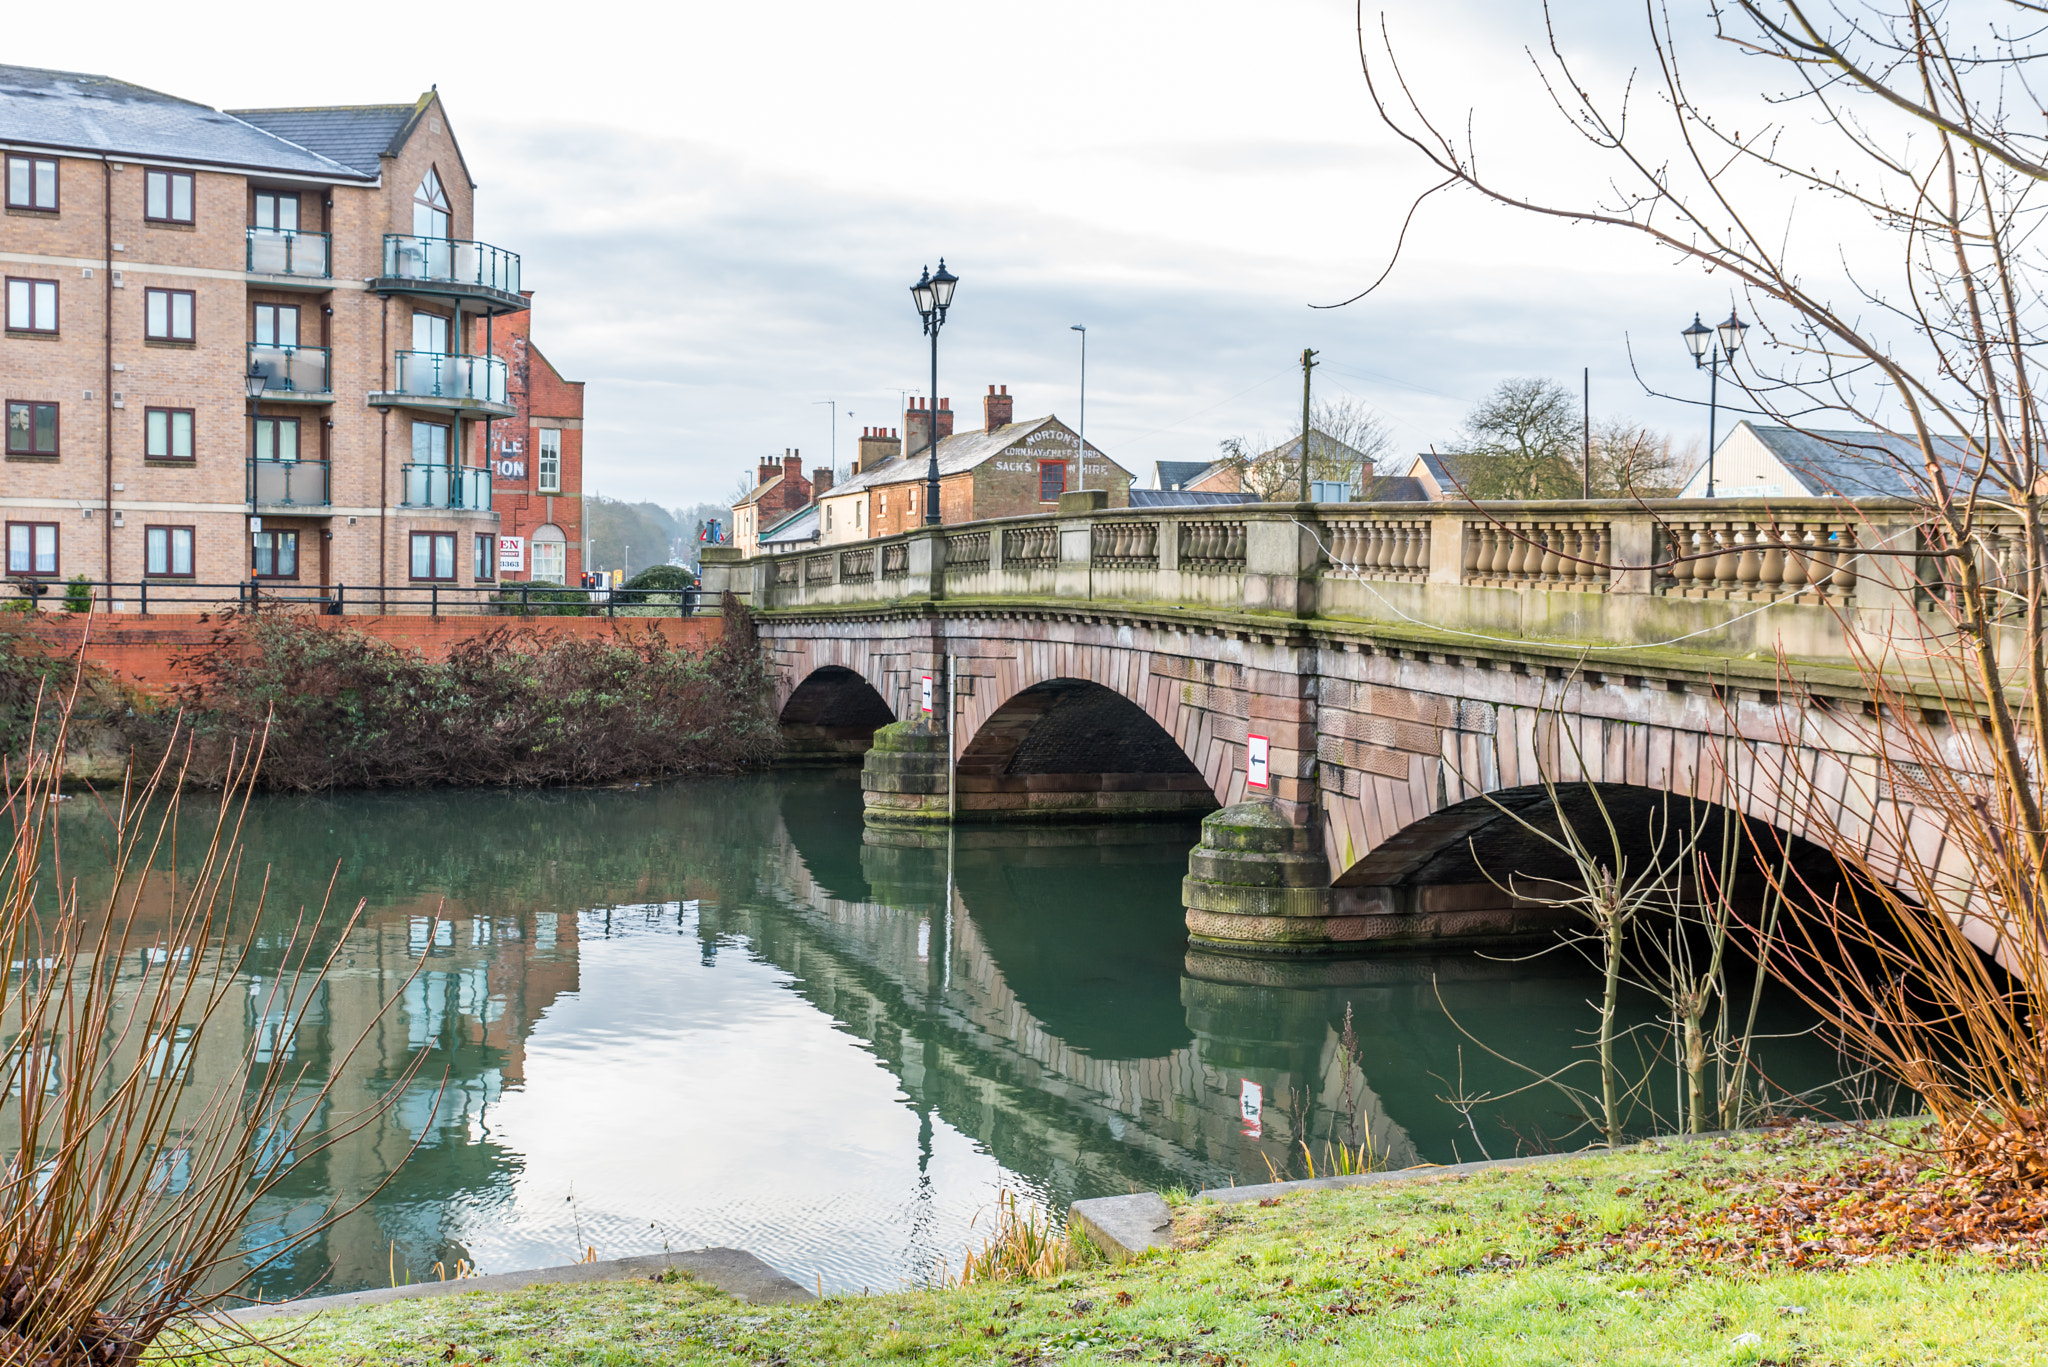 Bridge over Nene River in Northampton, United Kingdom